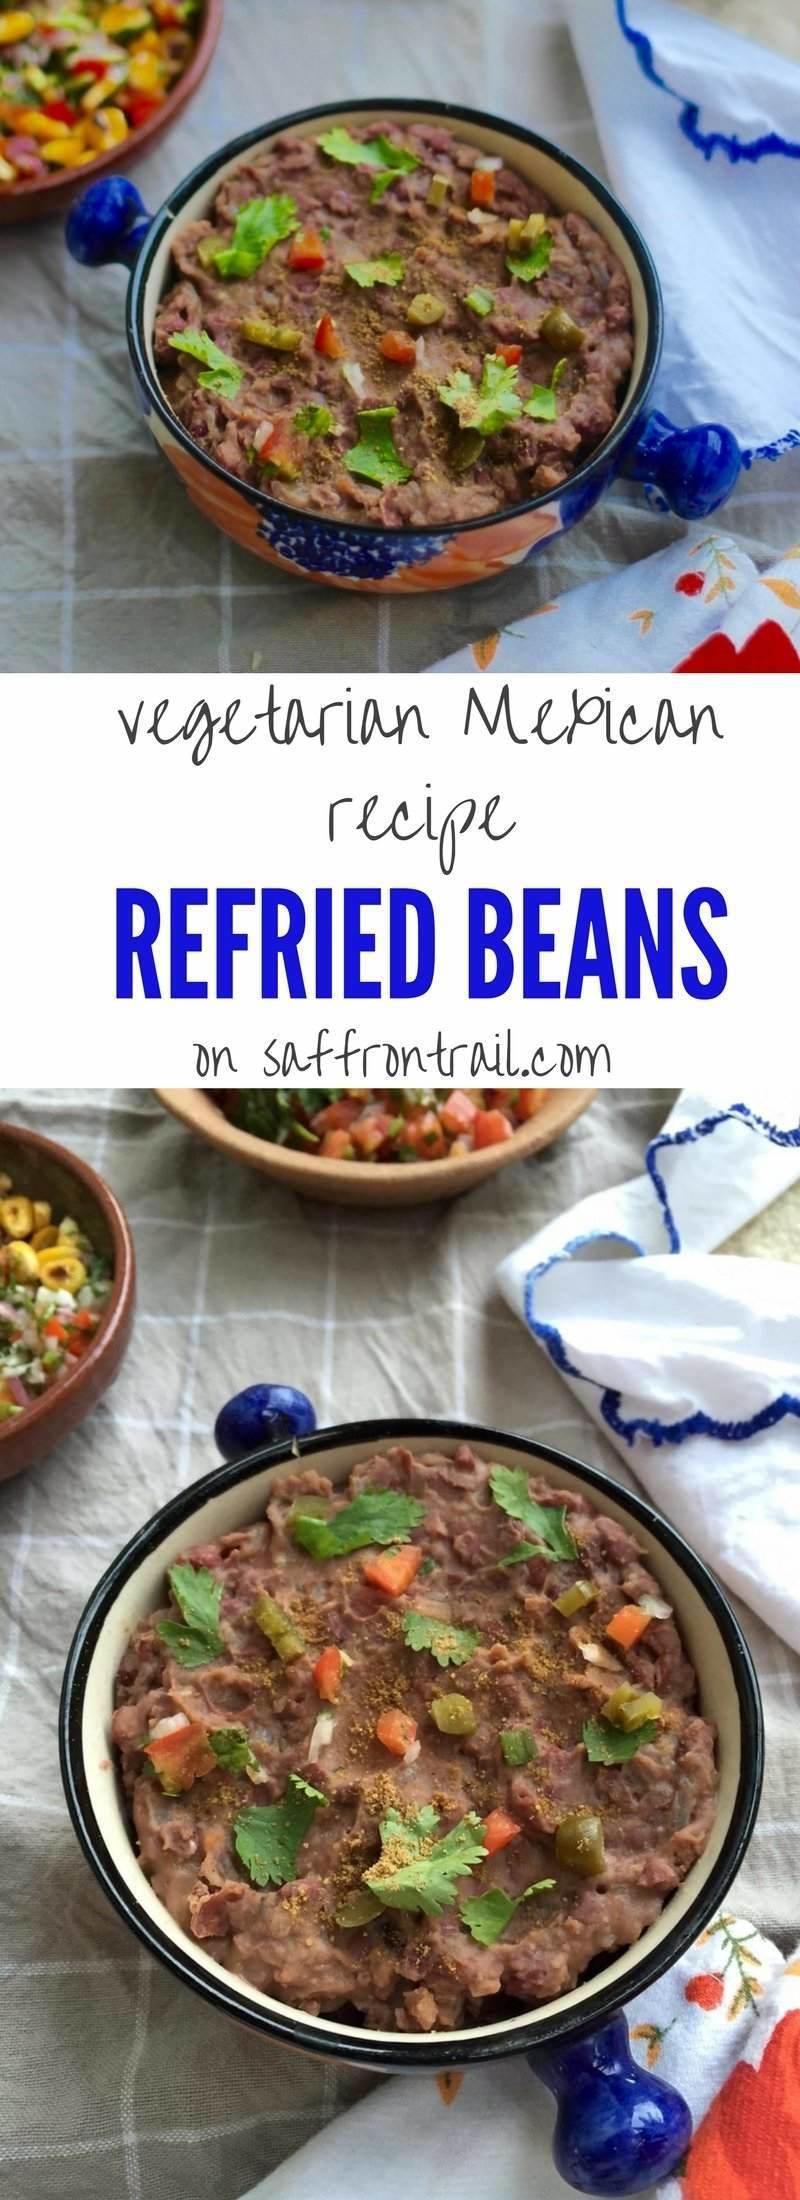 Refried Beans / Frijoles Refritos - Vegetarian Mexican Recipes ...